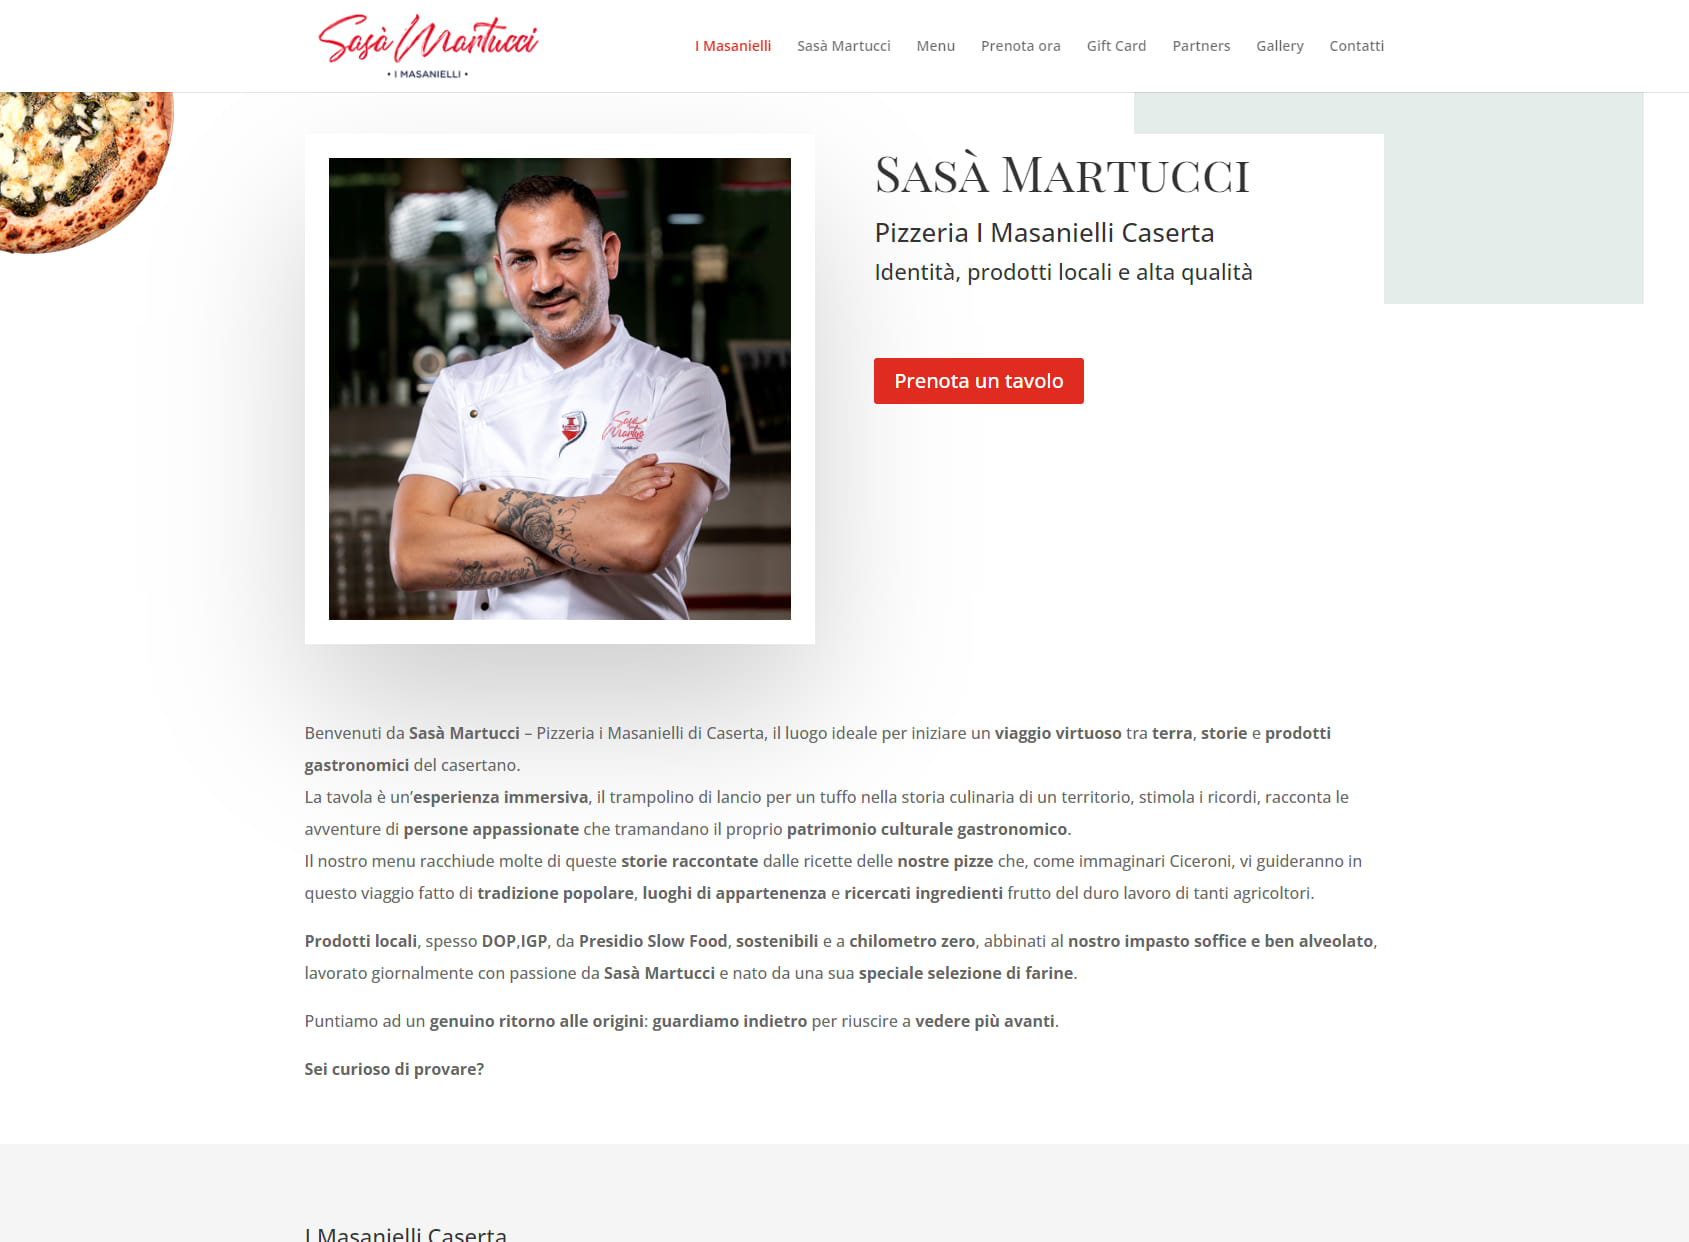 Sasà Martucci - Pizzeria I Masanielli